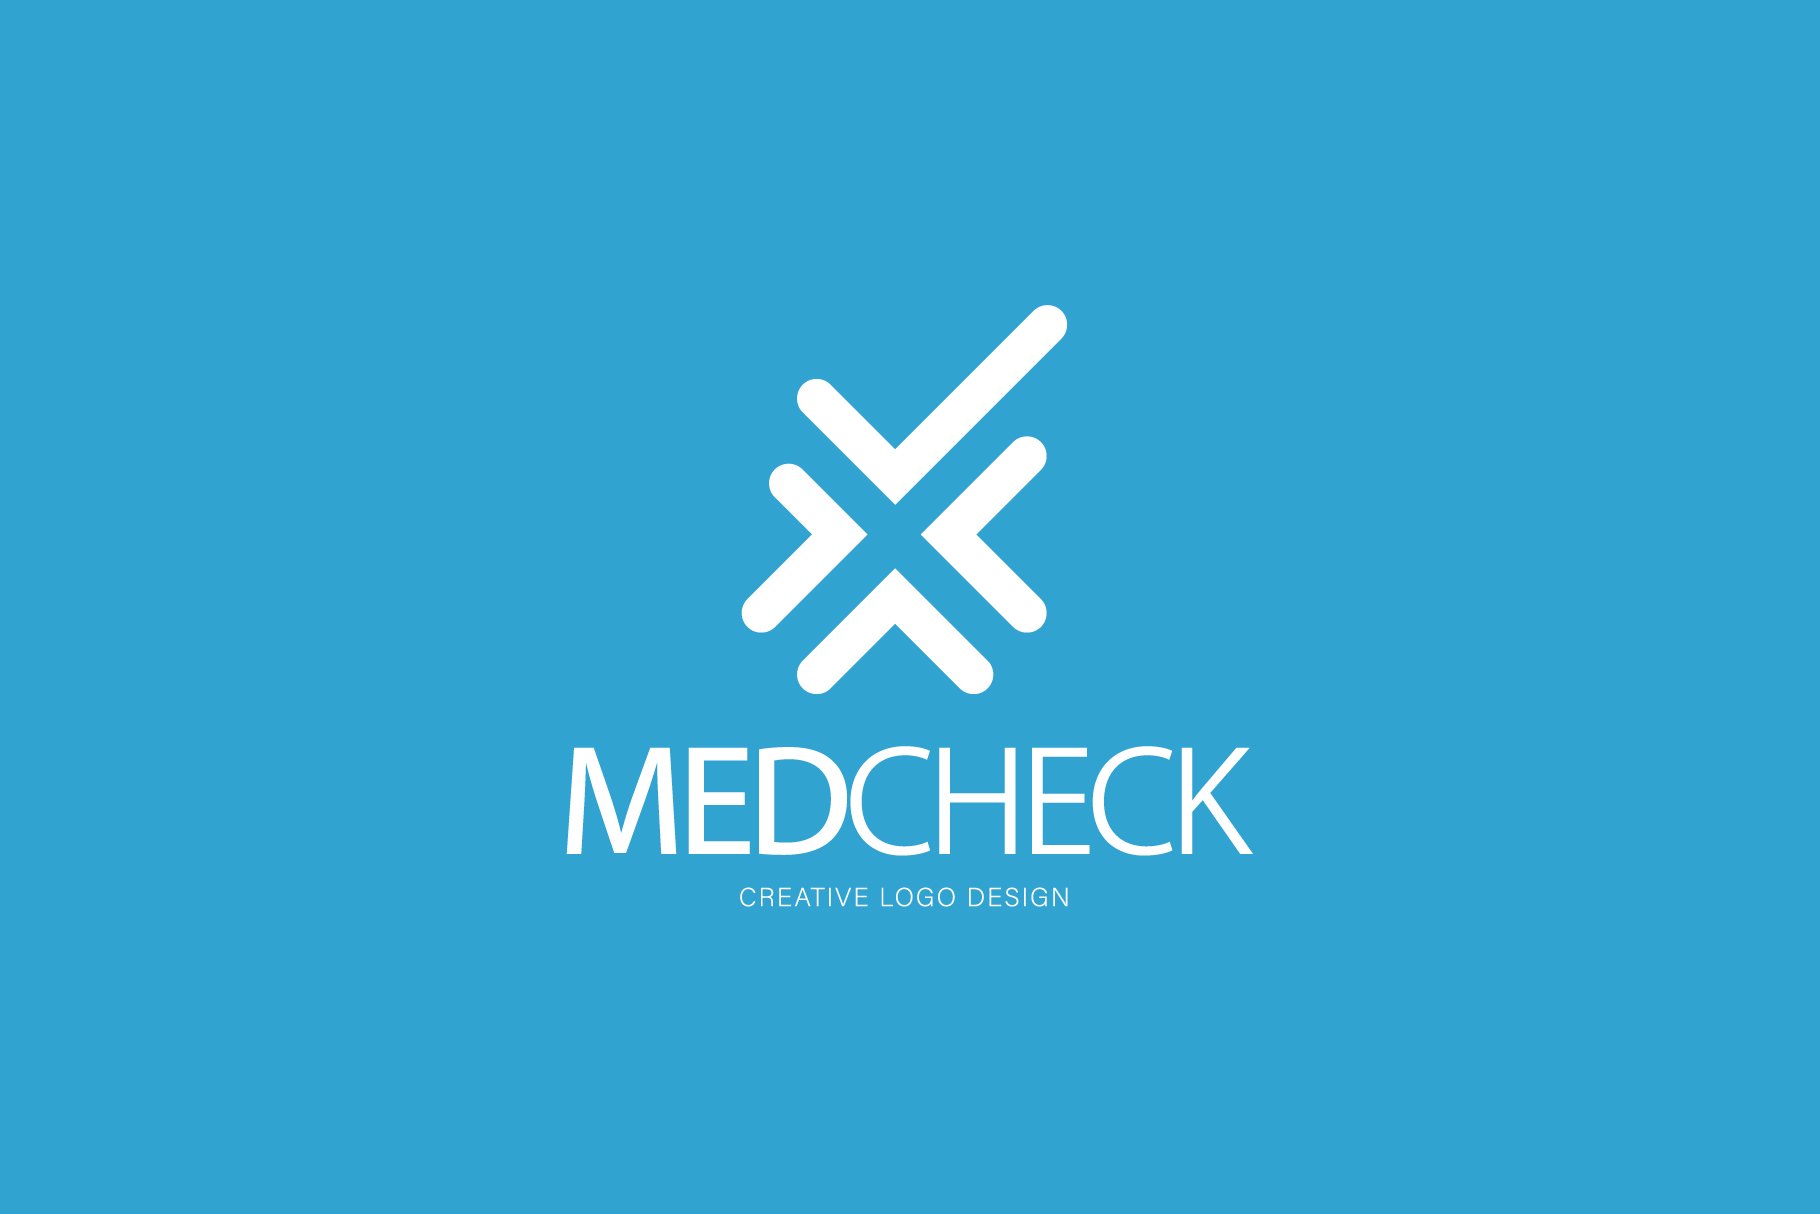 medical check logos preview image.